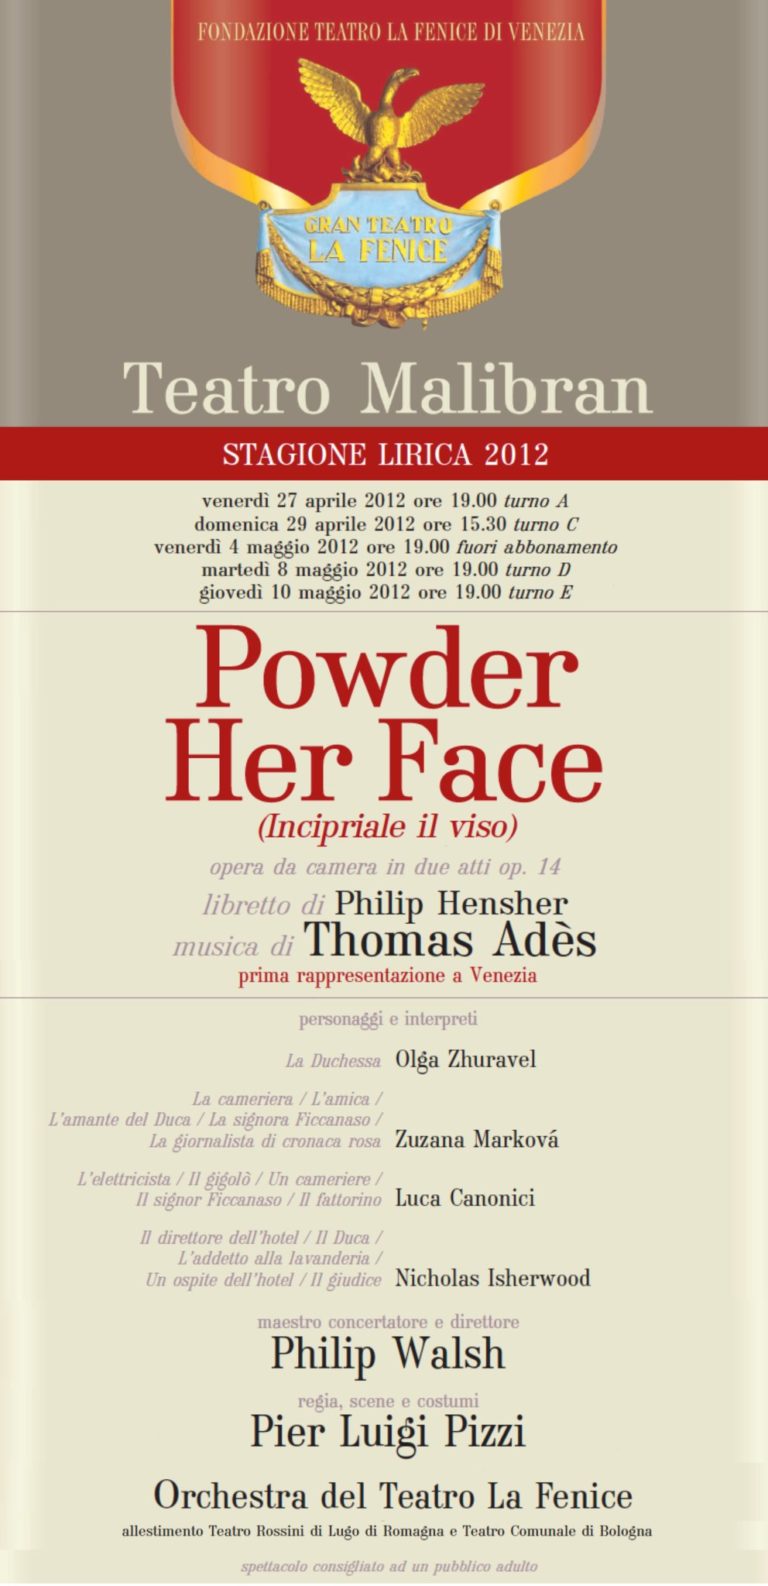 Powder her face. Venice. 2014